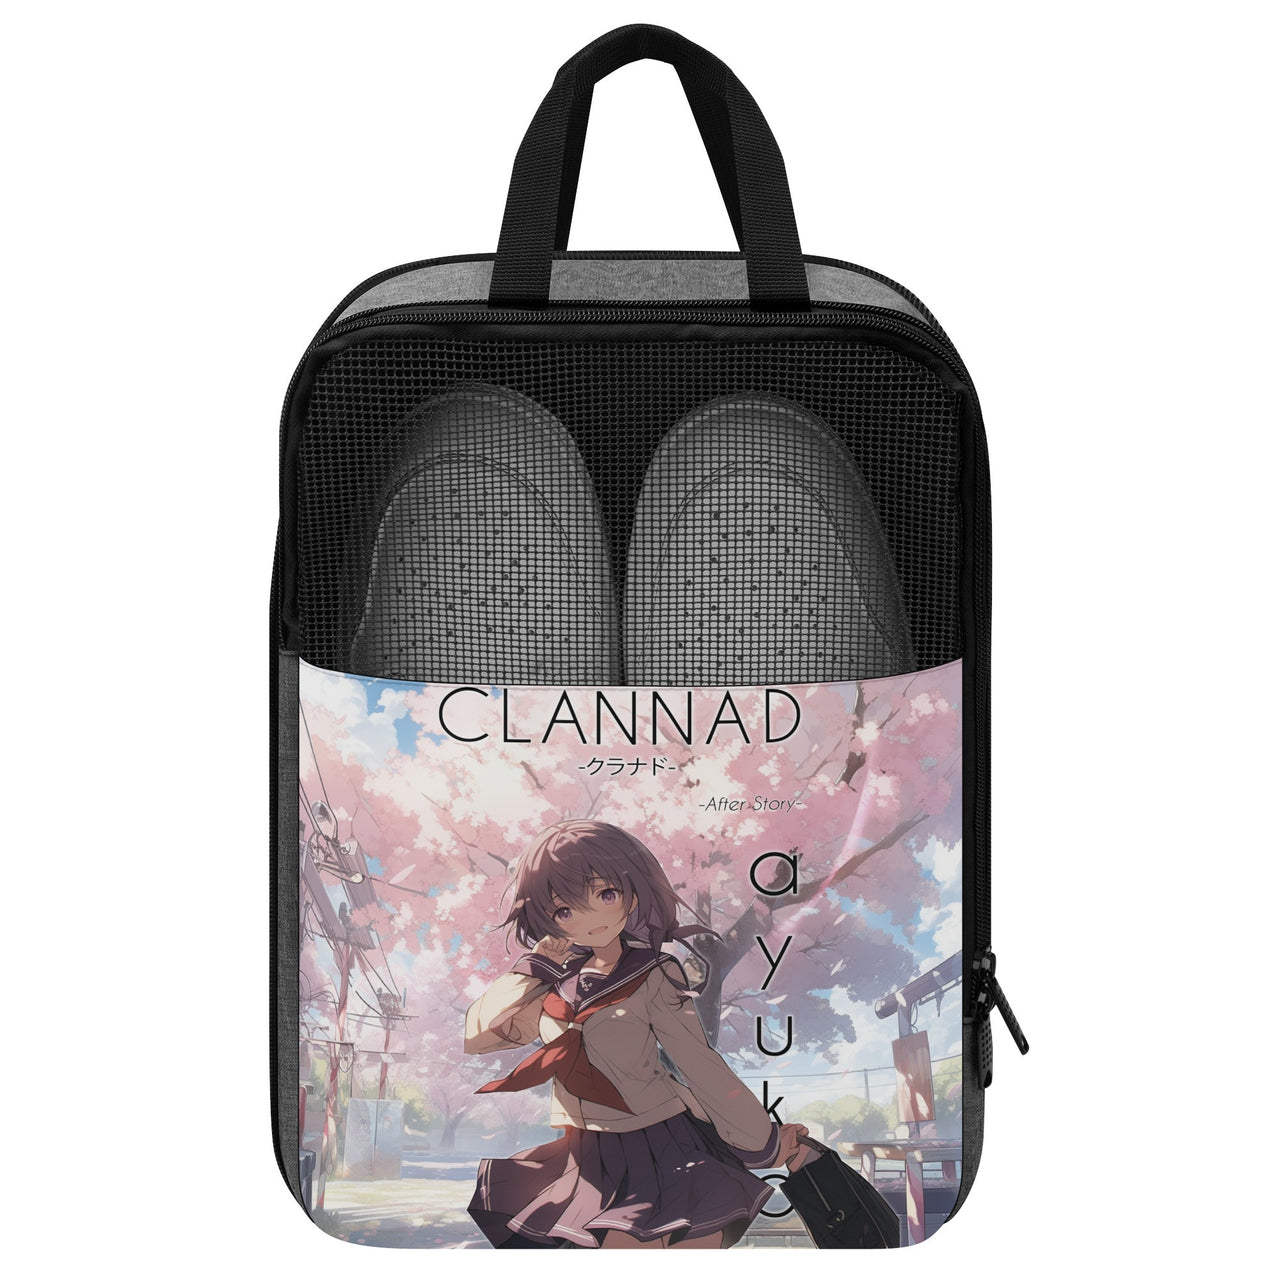 Clannad Shoe Bag